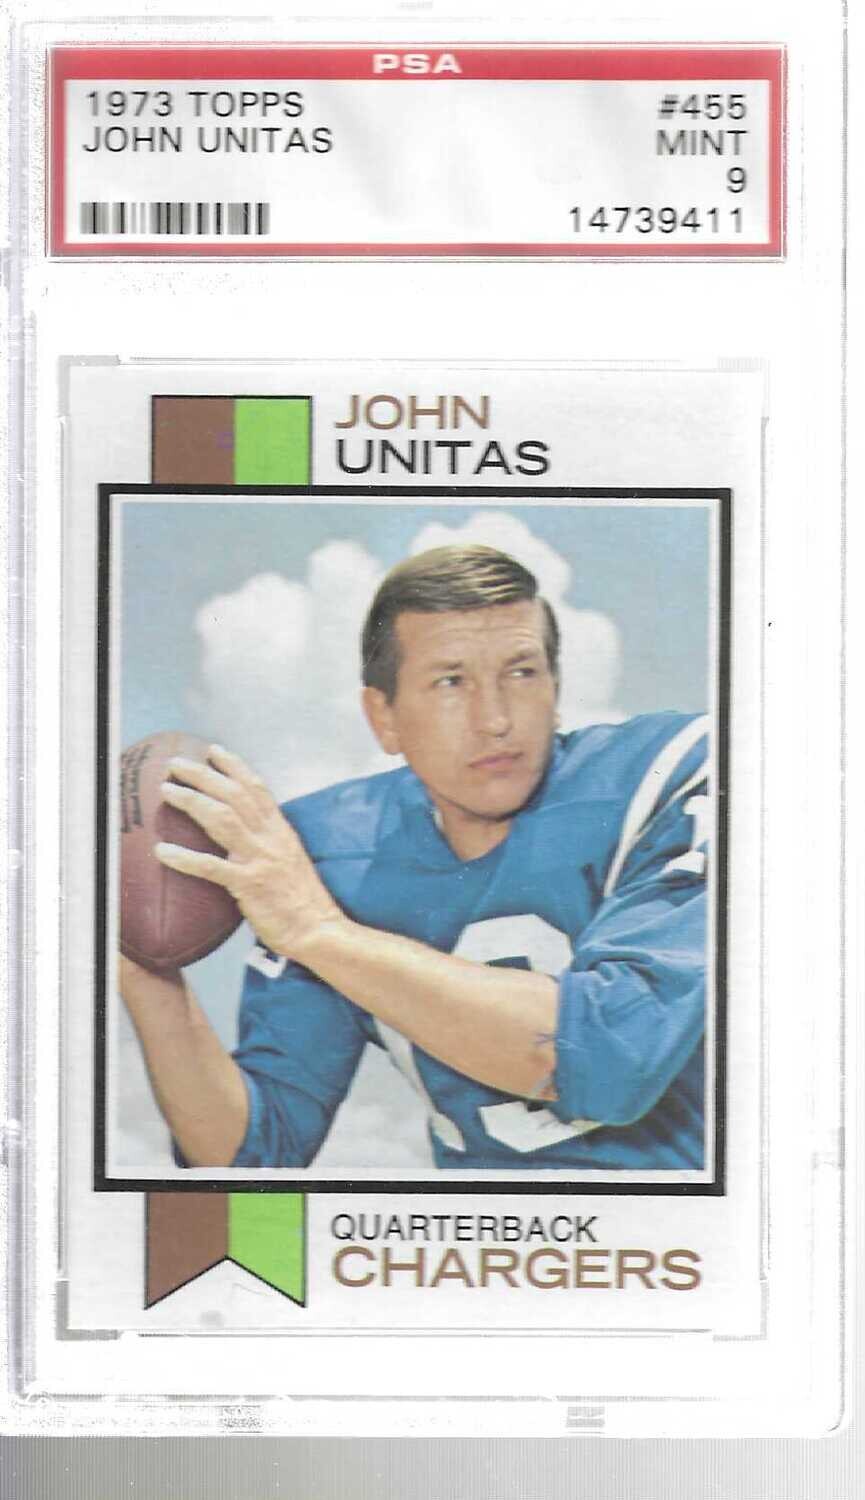 1973 Topps #455 John Unitas PSA 9